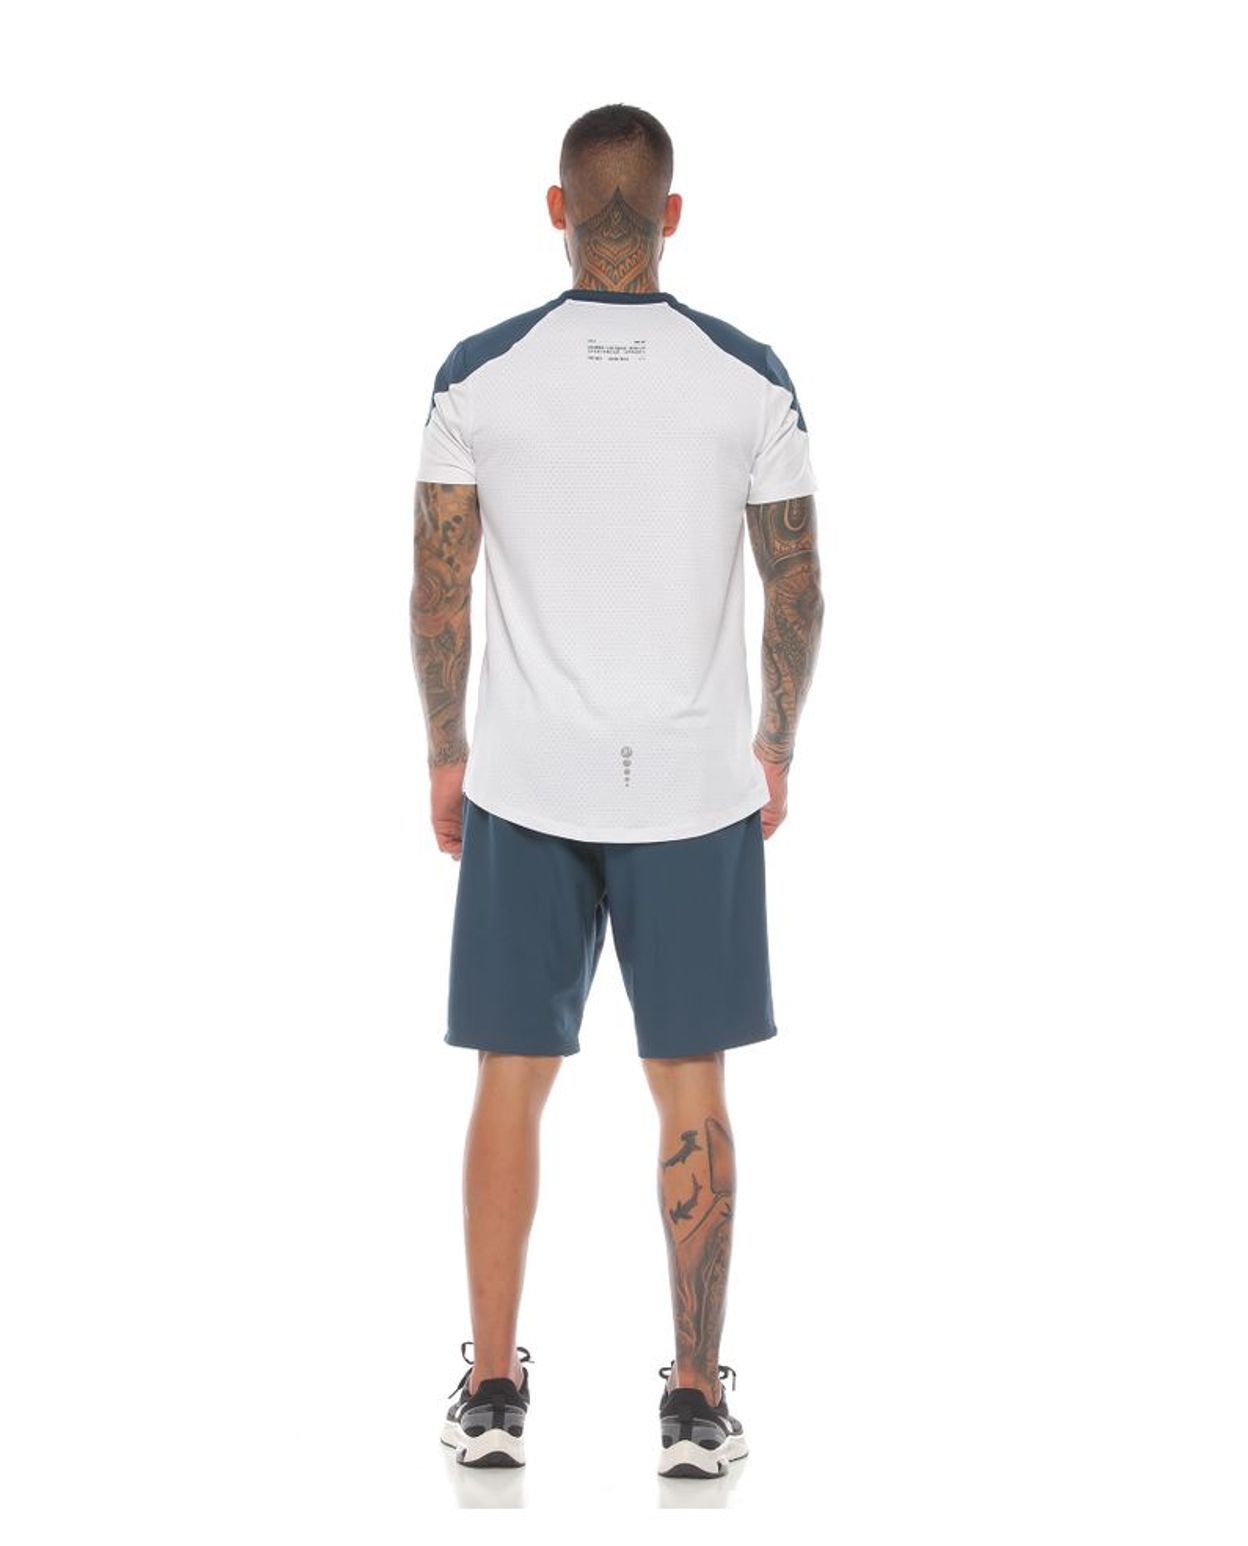 modelo-con-Camiseta-Deportiva-Blanca-Menta-y-pantaloneta-deportiva-para-Hombre-parte-trasera